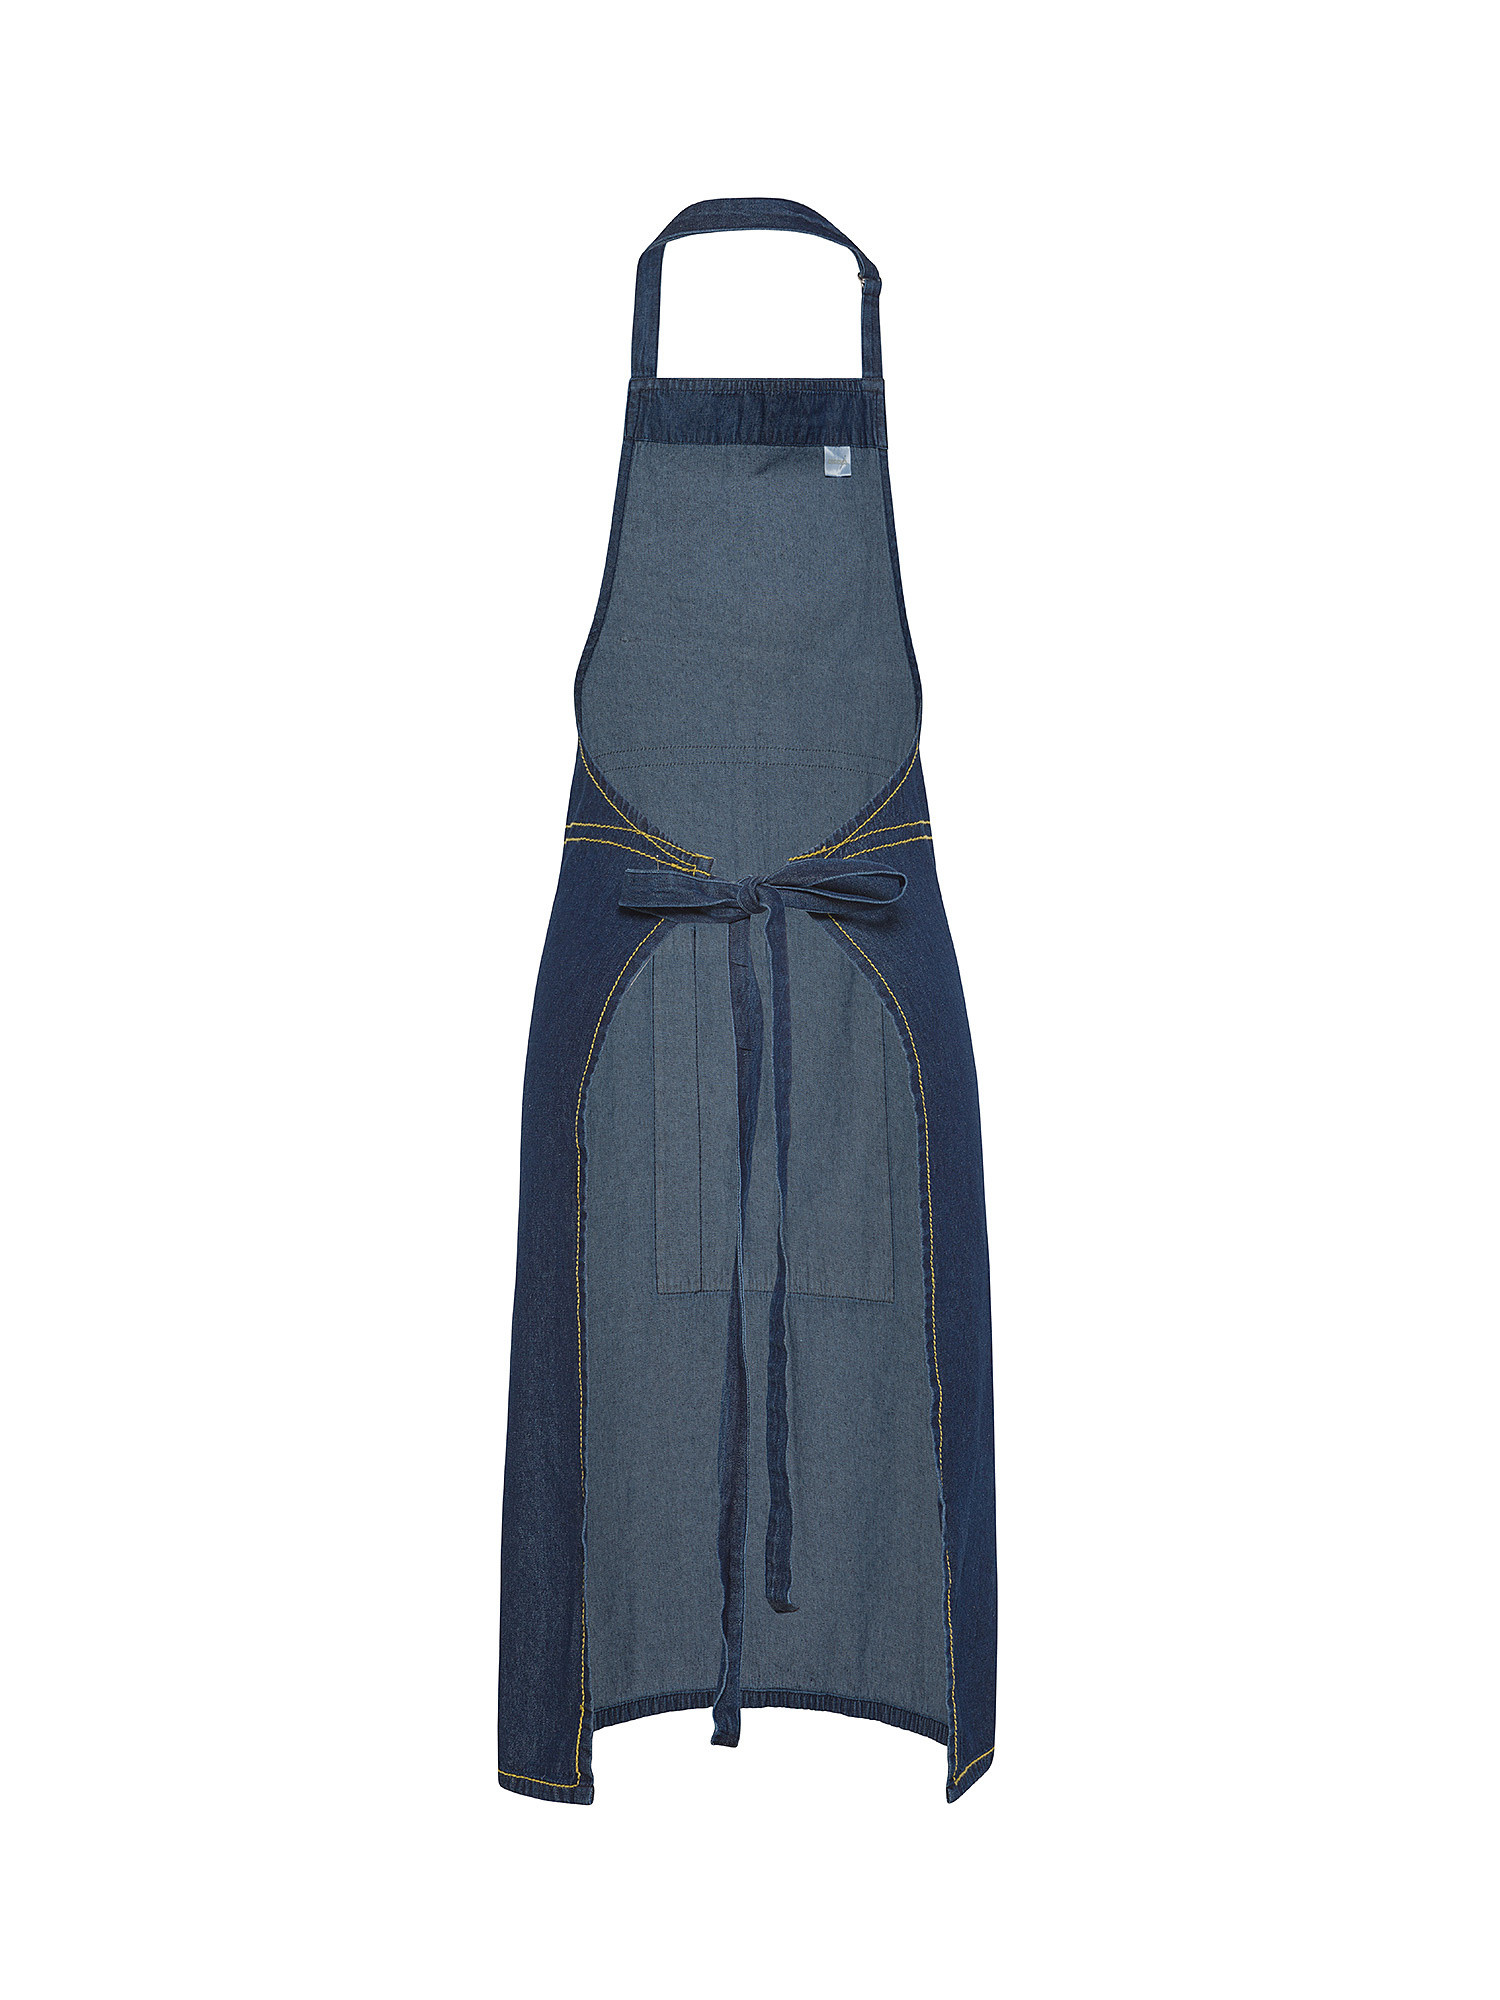 Cotton denim kitchen apron, Blue, large image number 1